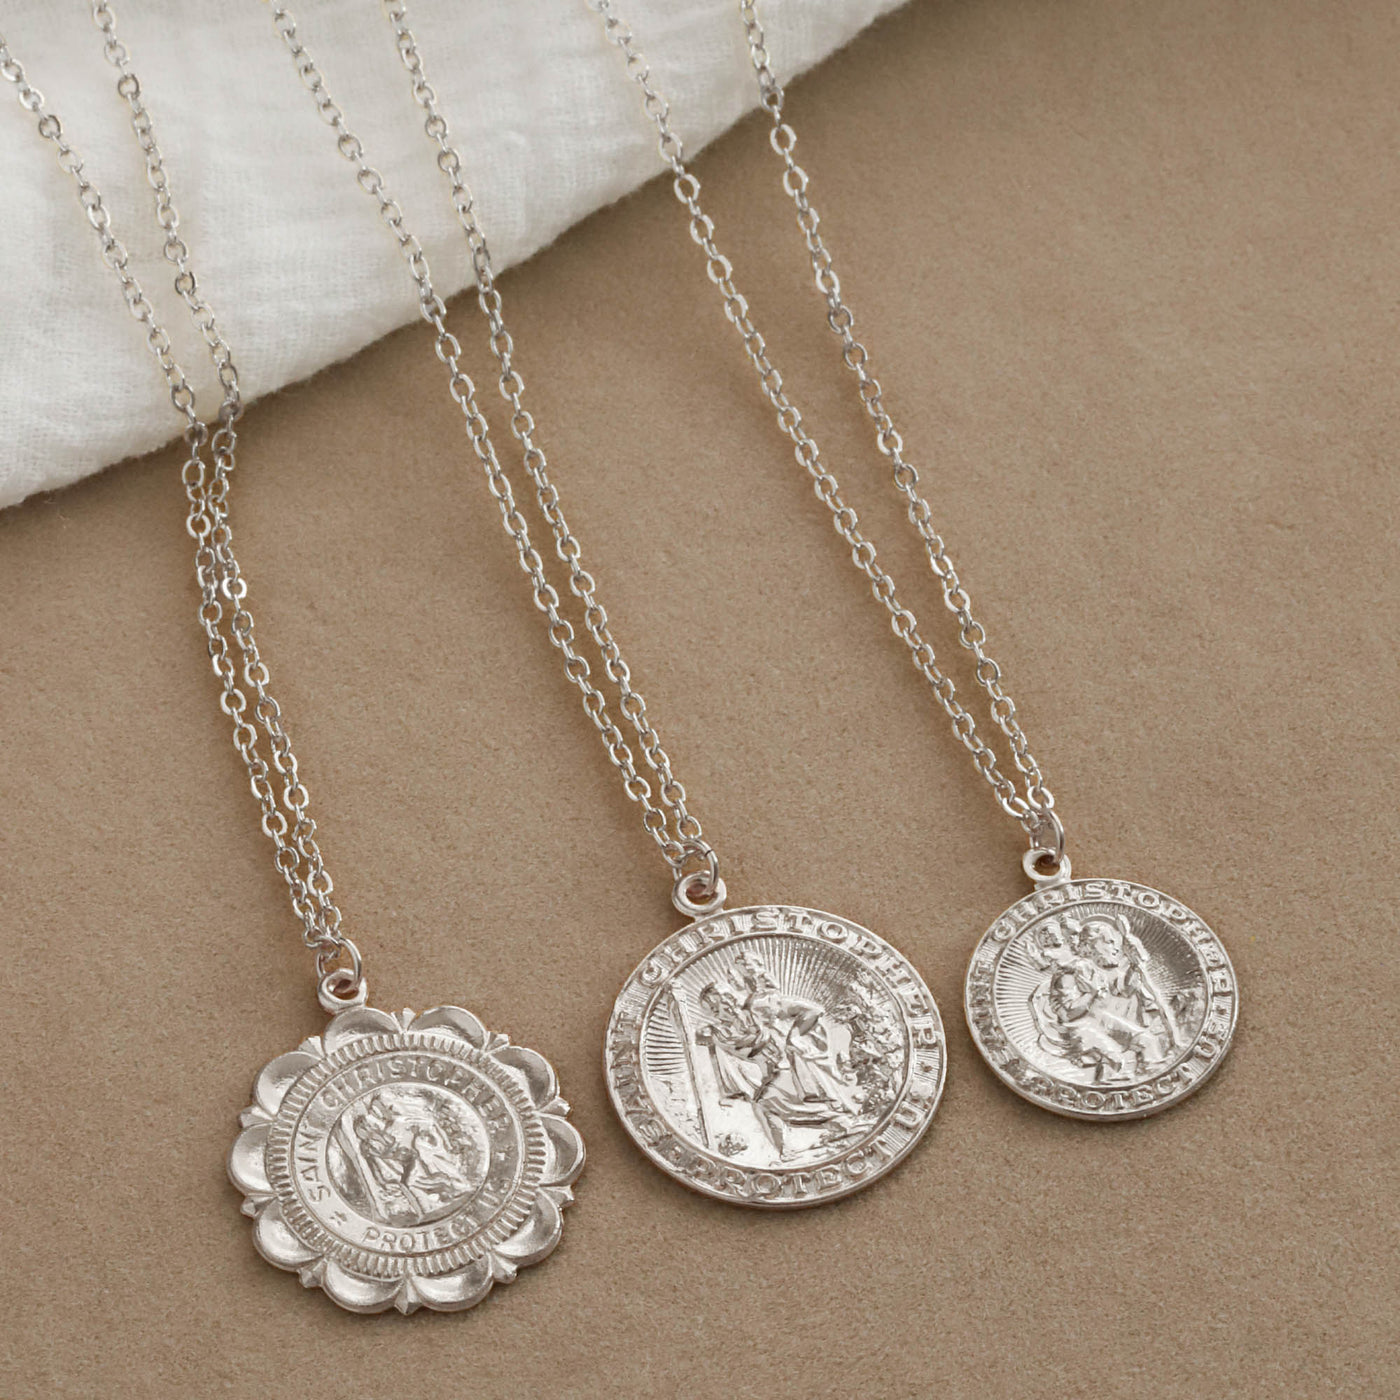 Silver pendant necklaces